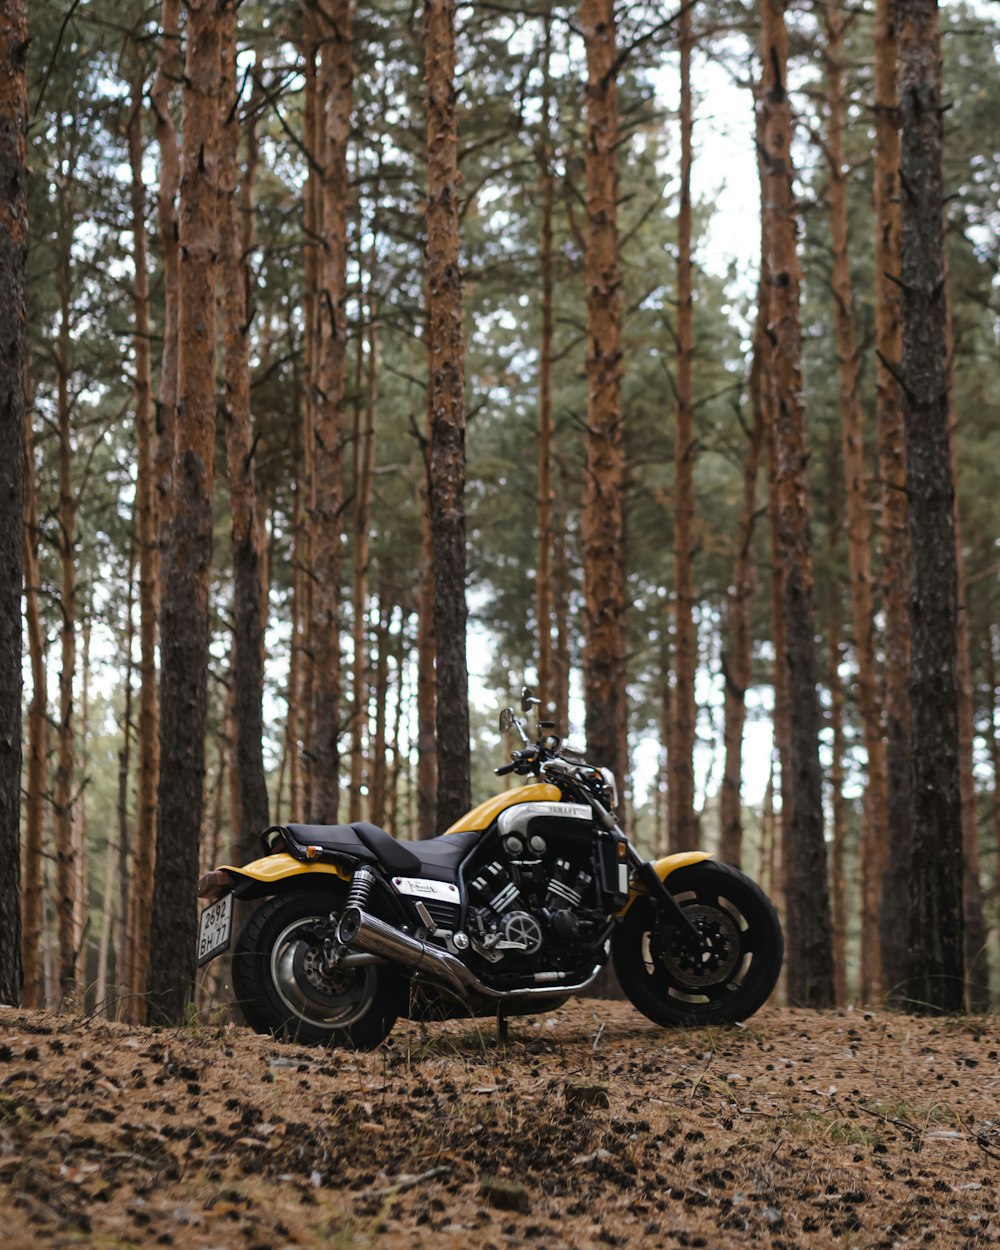 Motocicleta cruiser amarilla y negra rodeada de árboles